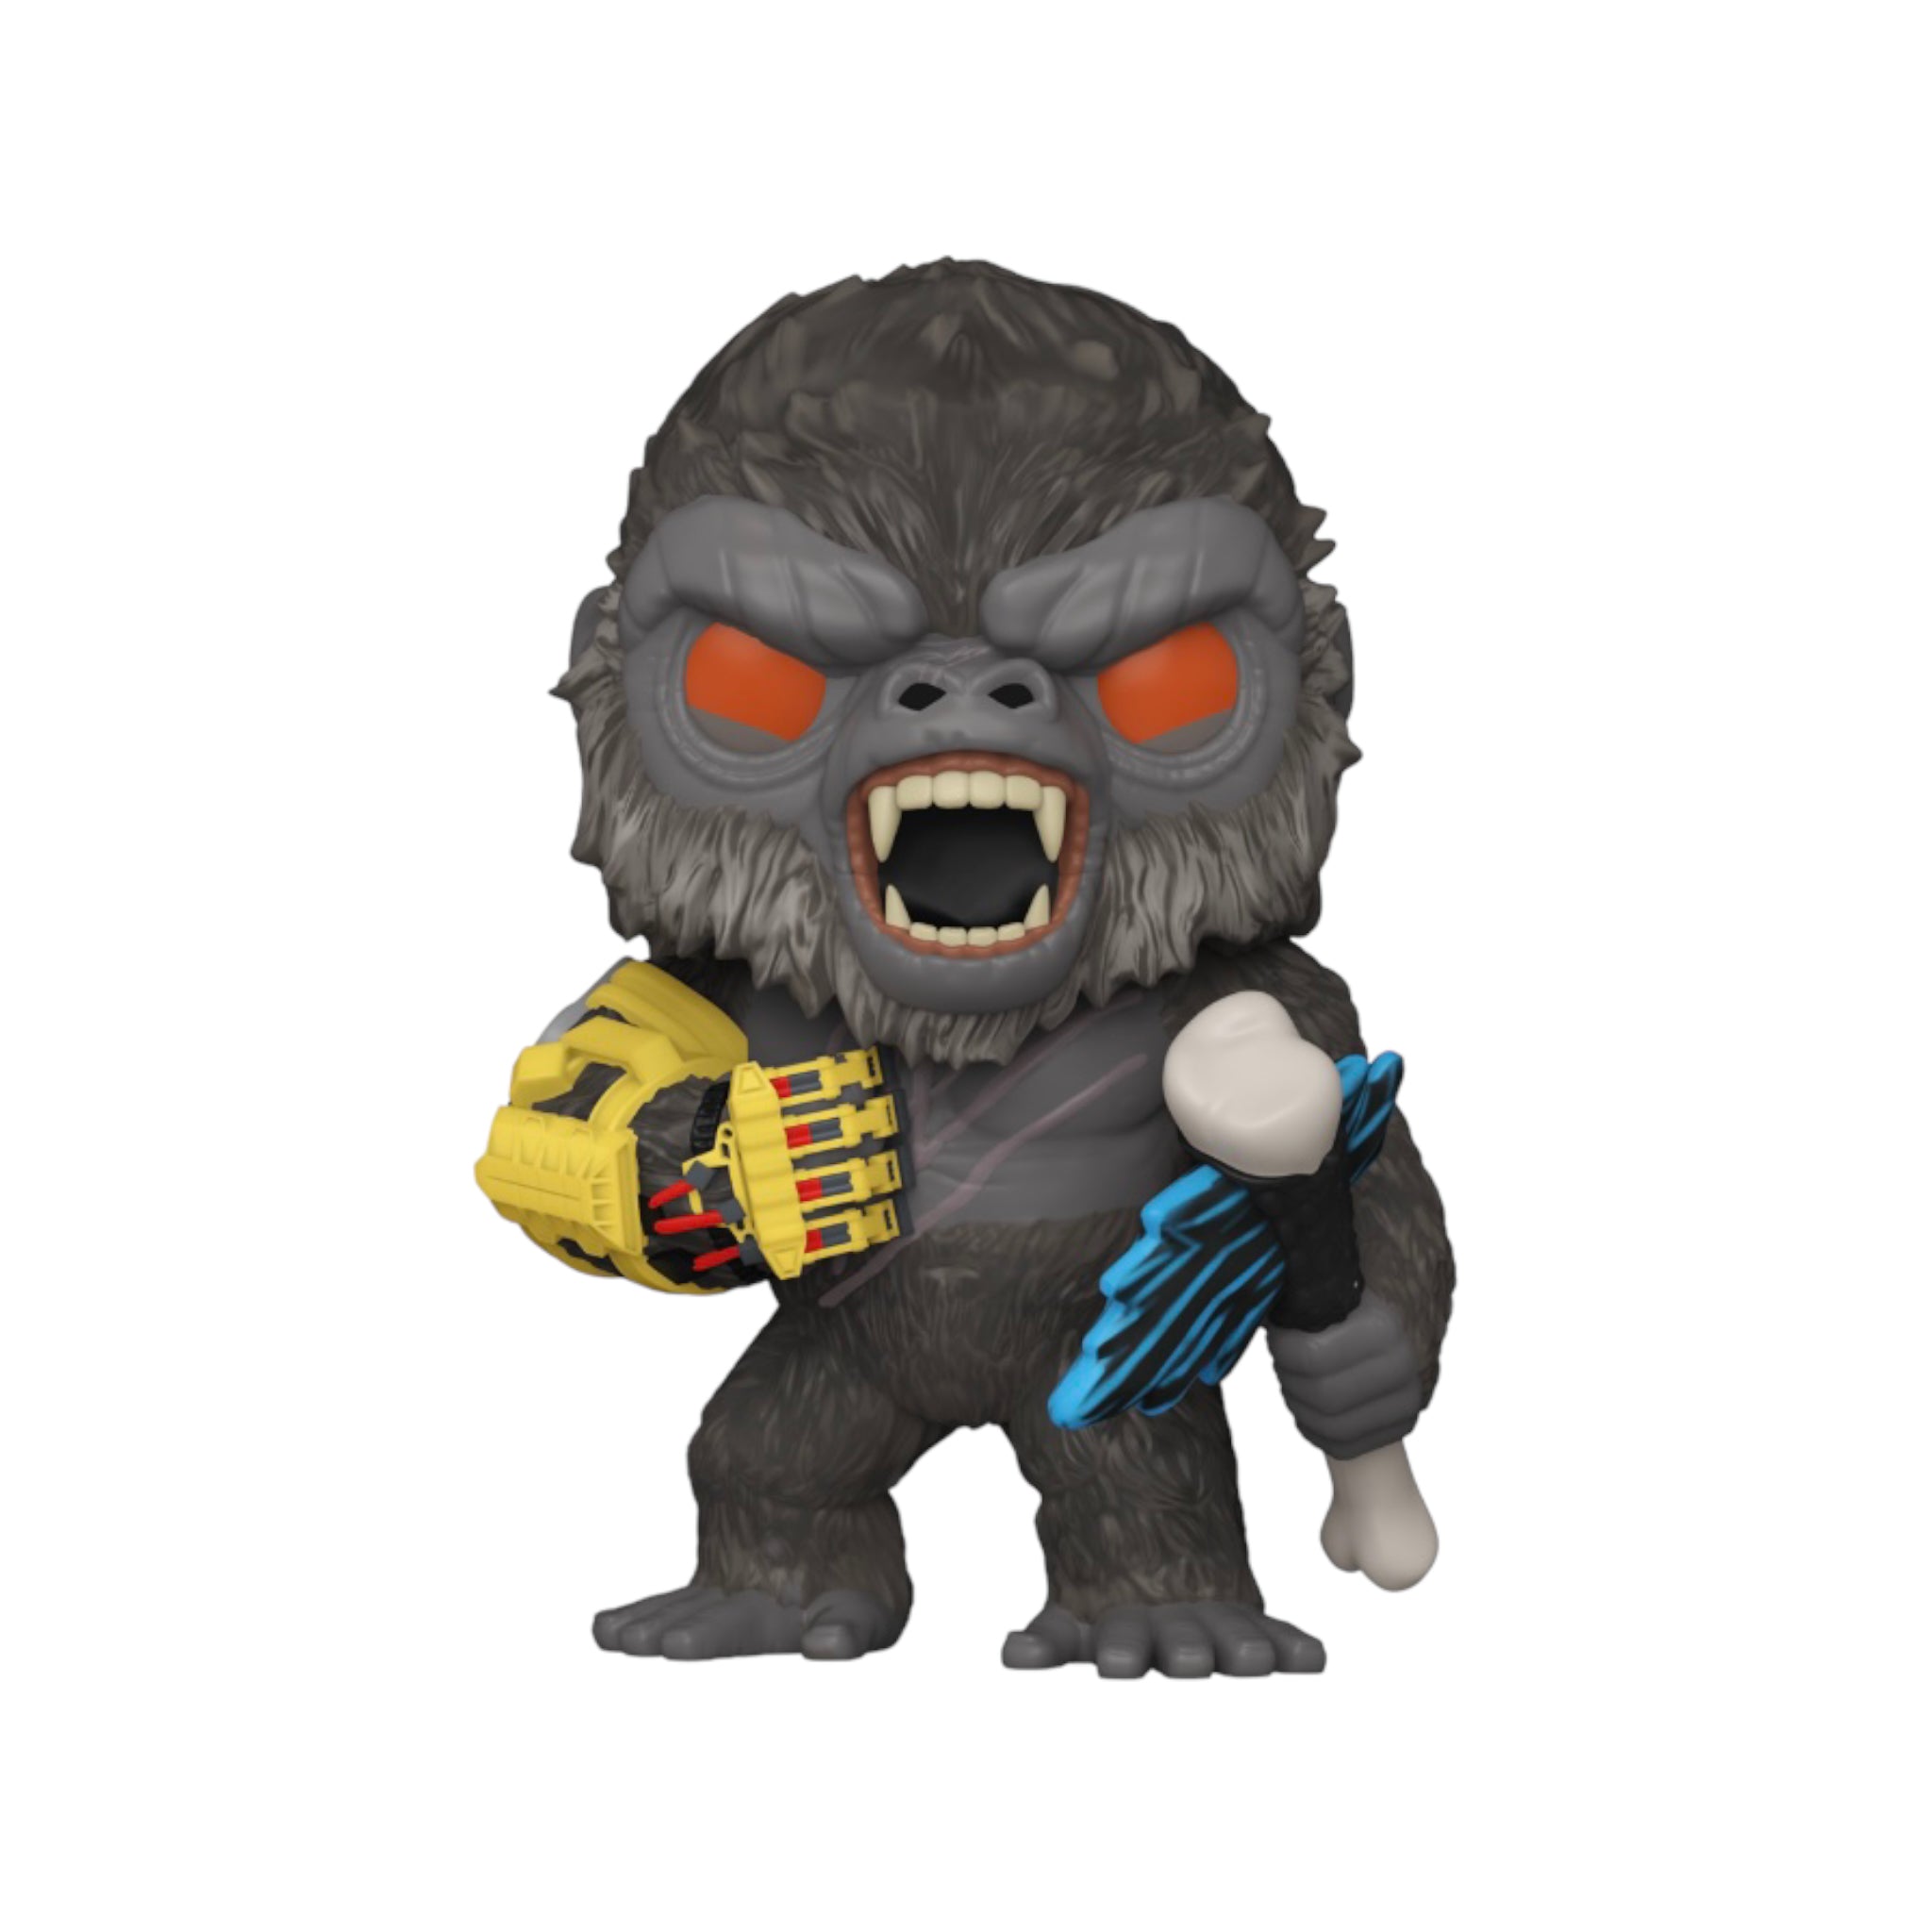 Kong #1547 Funko Pop! - Godzilla X Kong: The New Empire - Target Con 2024 Exclusive